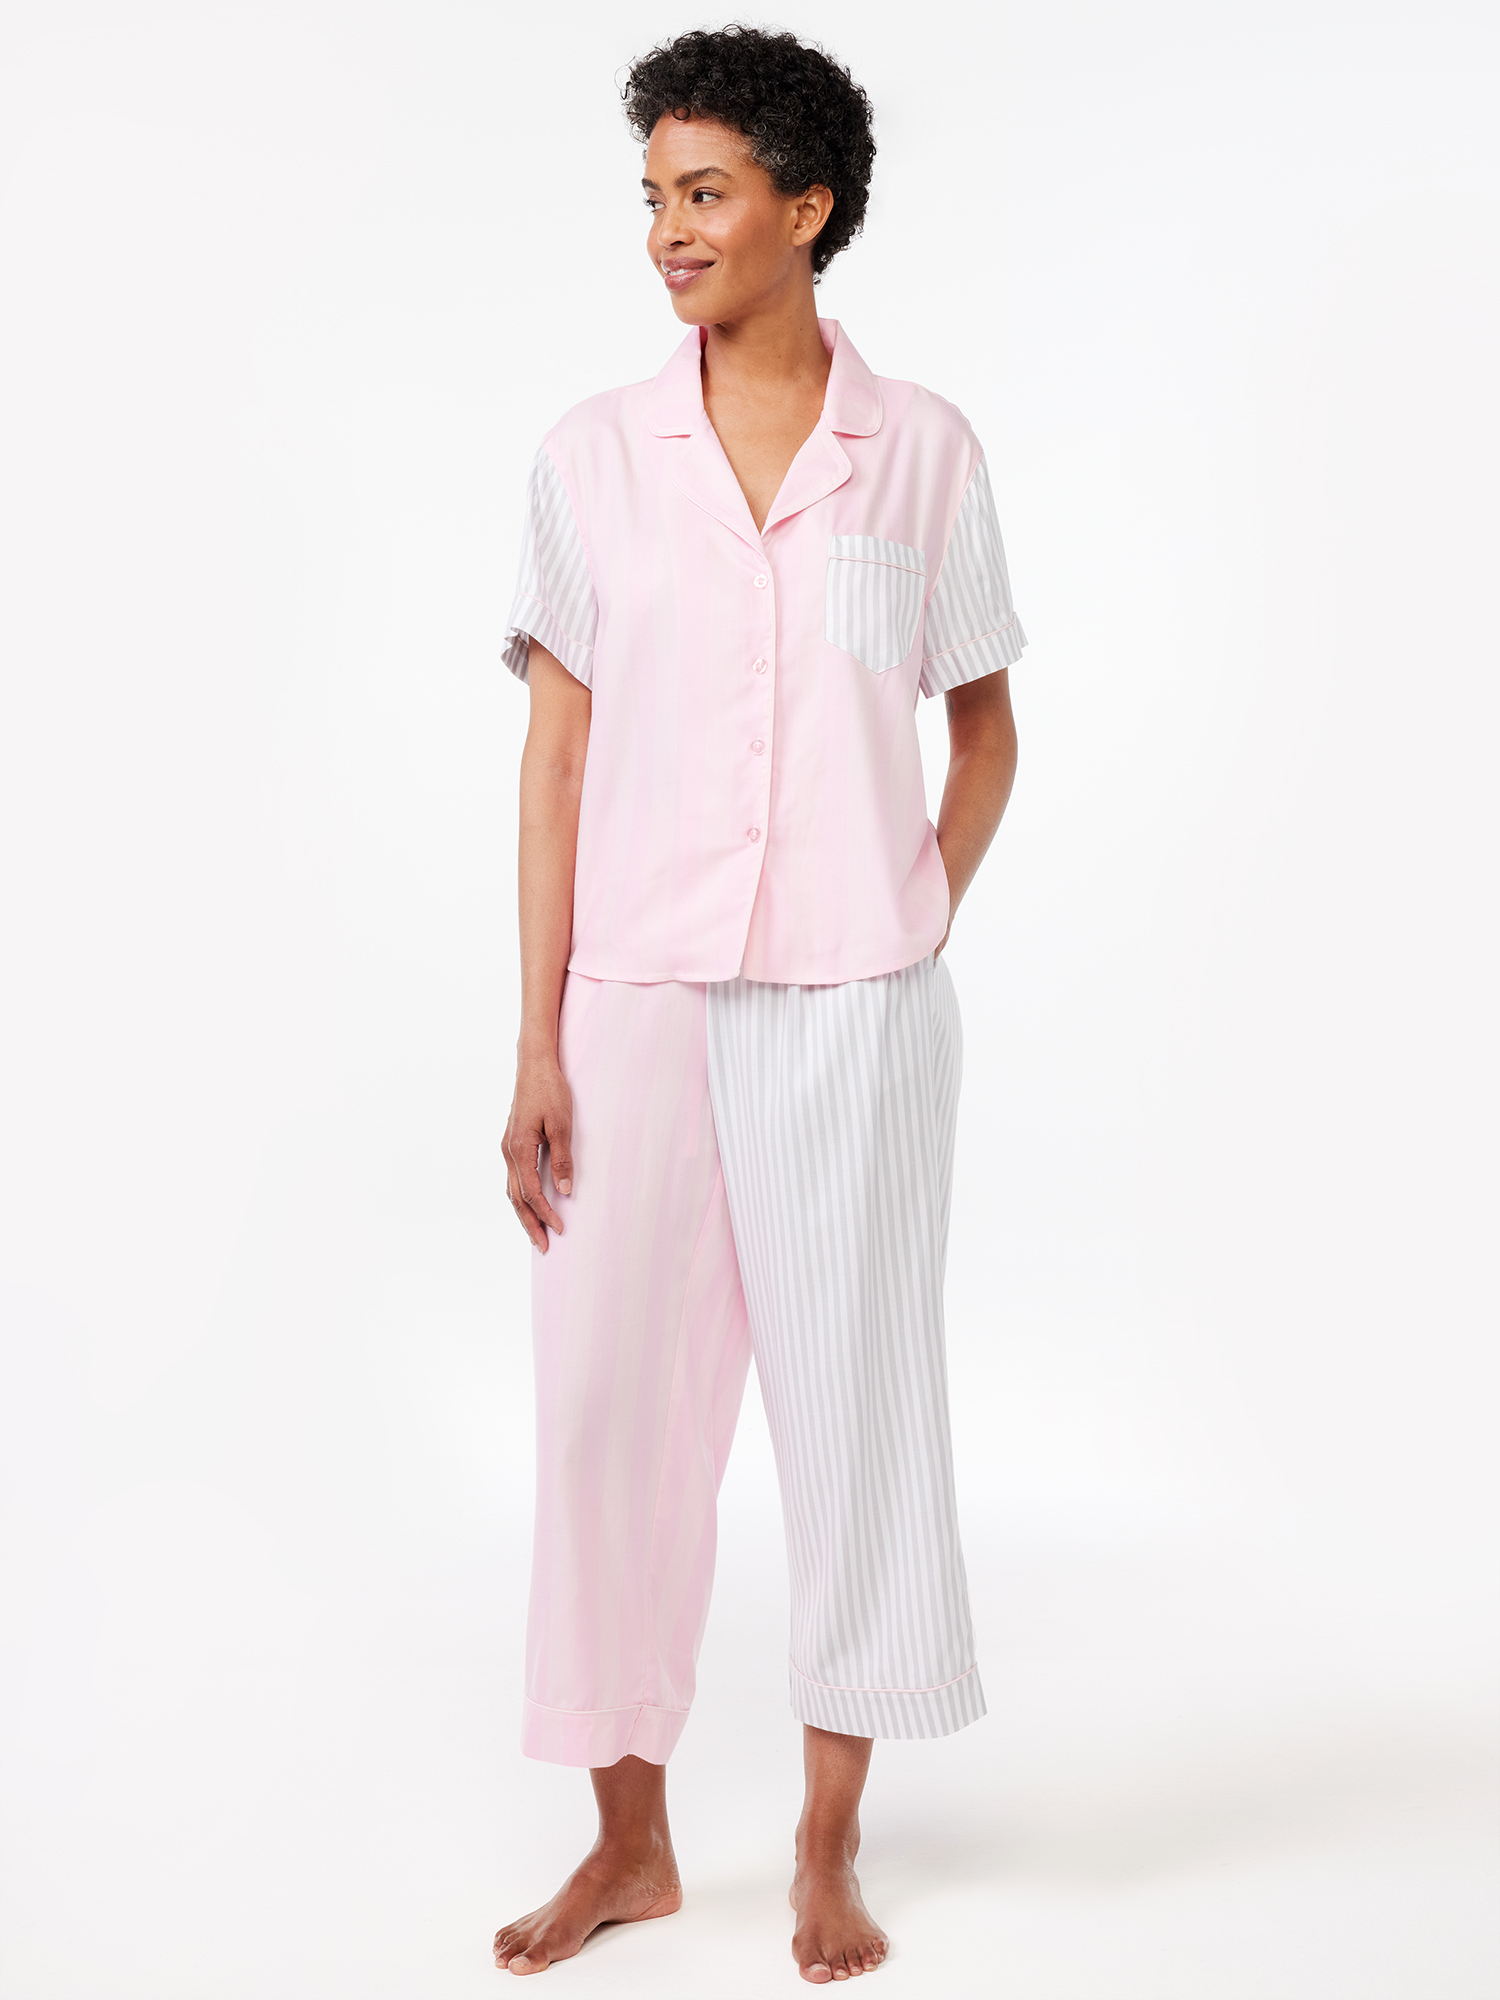 Joyspun Women's Woven Notch Collar Pajama Top, Sizes S to 3X - image 3 of 5